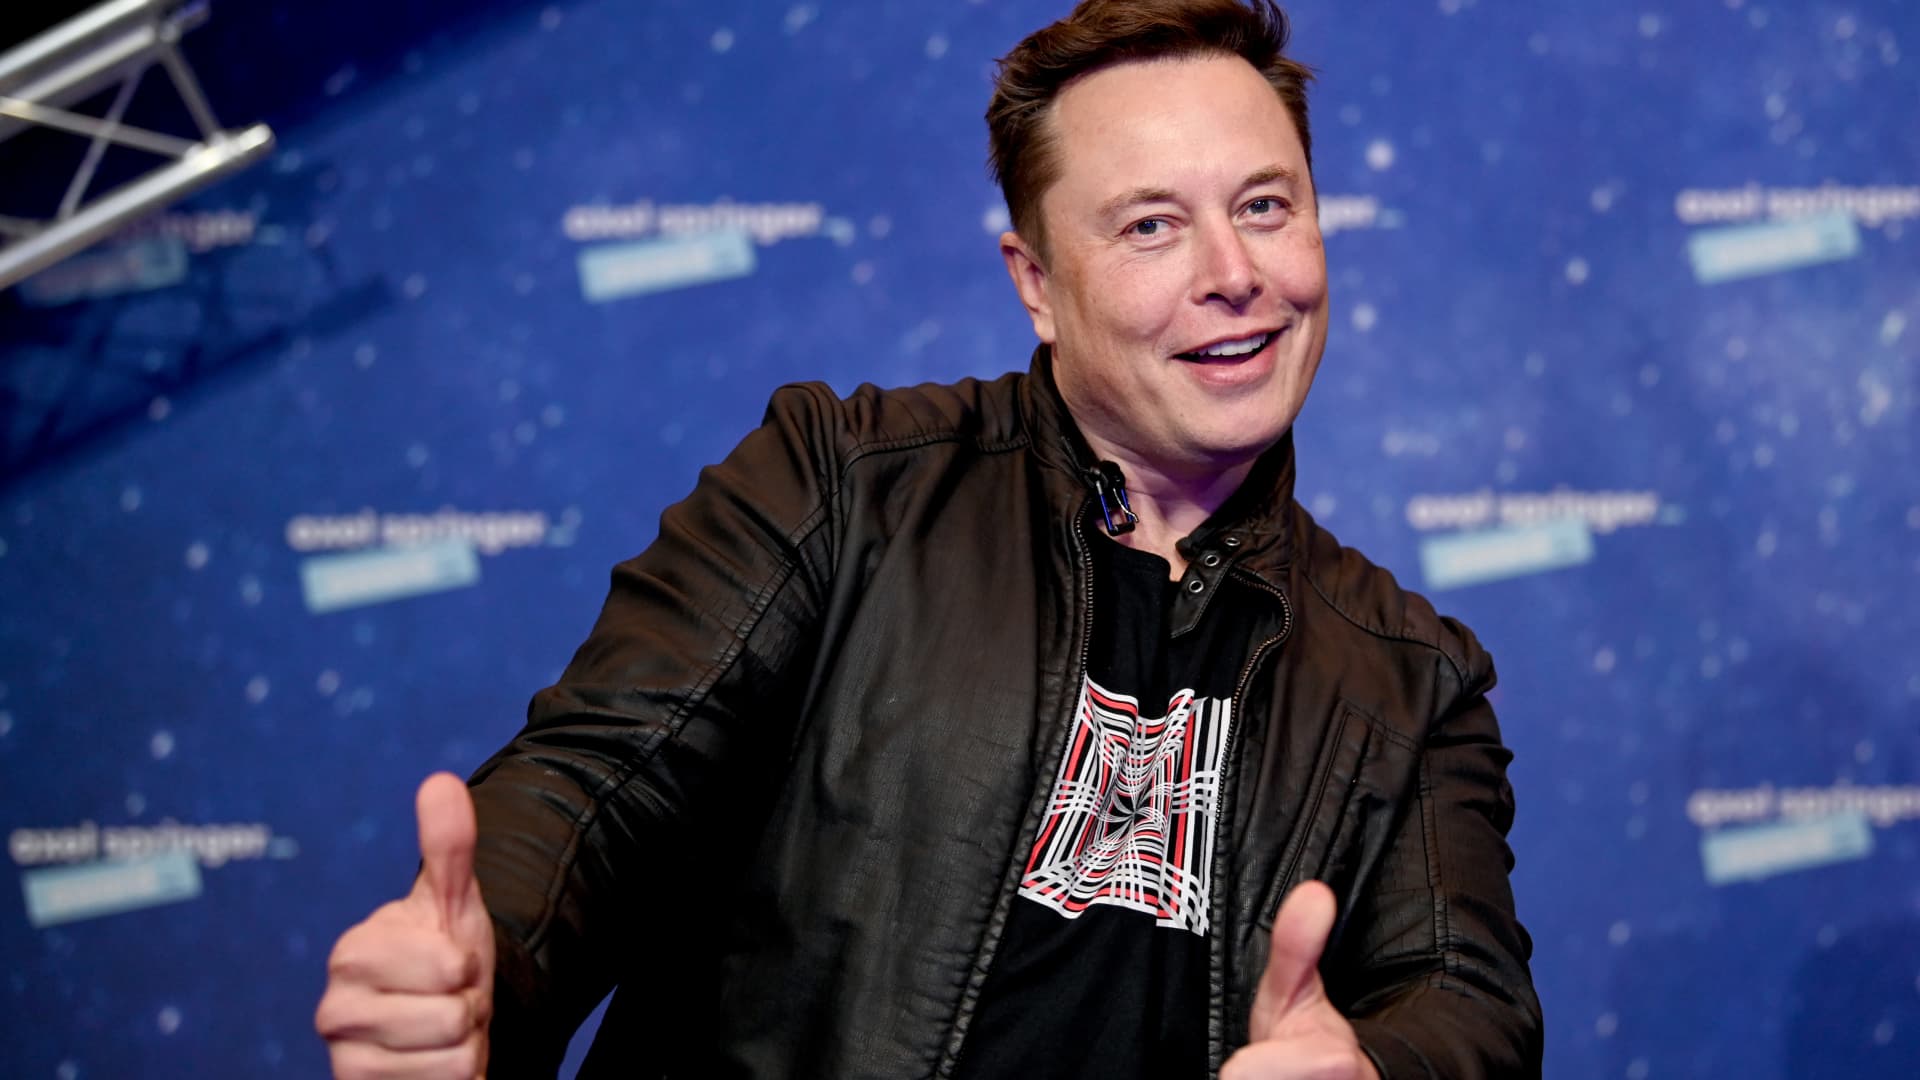 Elon Musk’s Twitter bid faces major skepticism on Wall Street